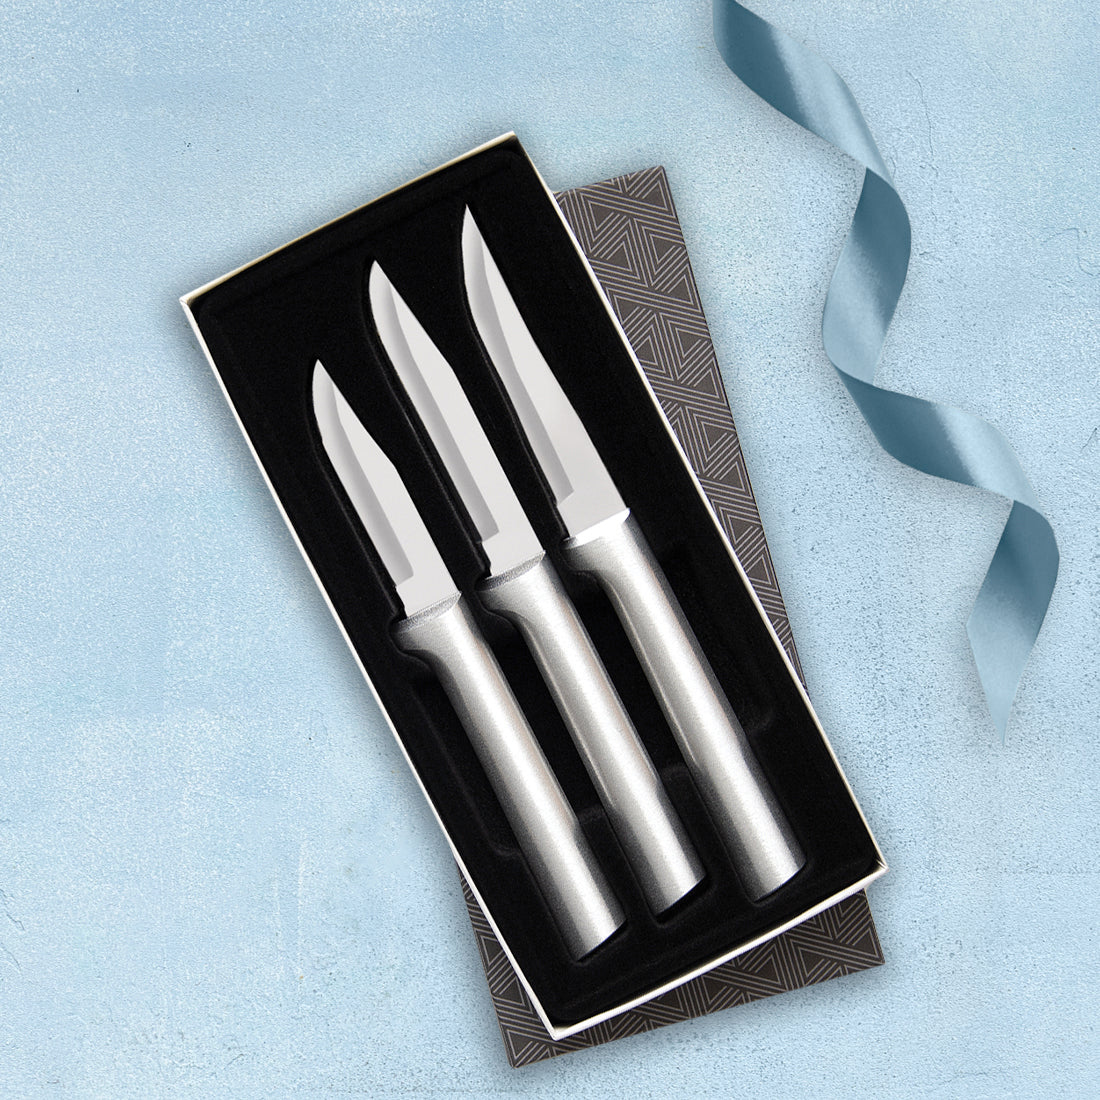 Rada Cutlery S4S 4-Serrated Steak Knives Knife Gift Set